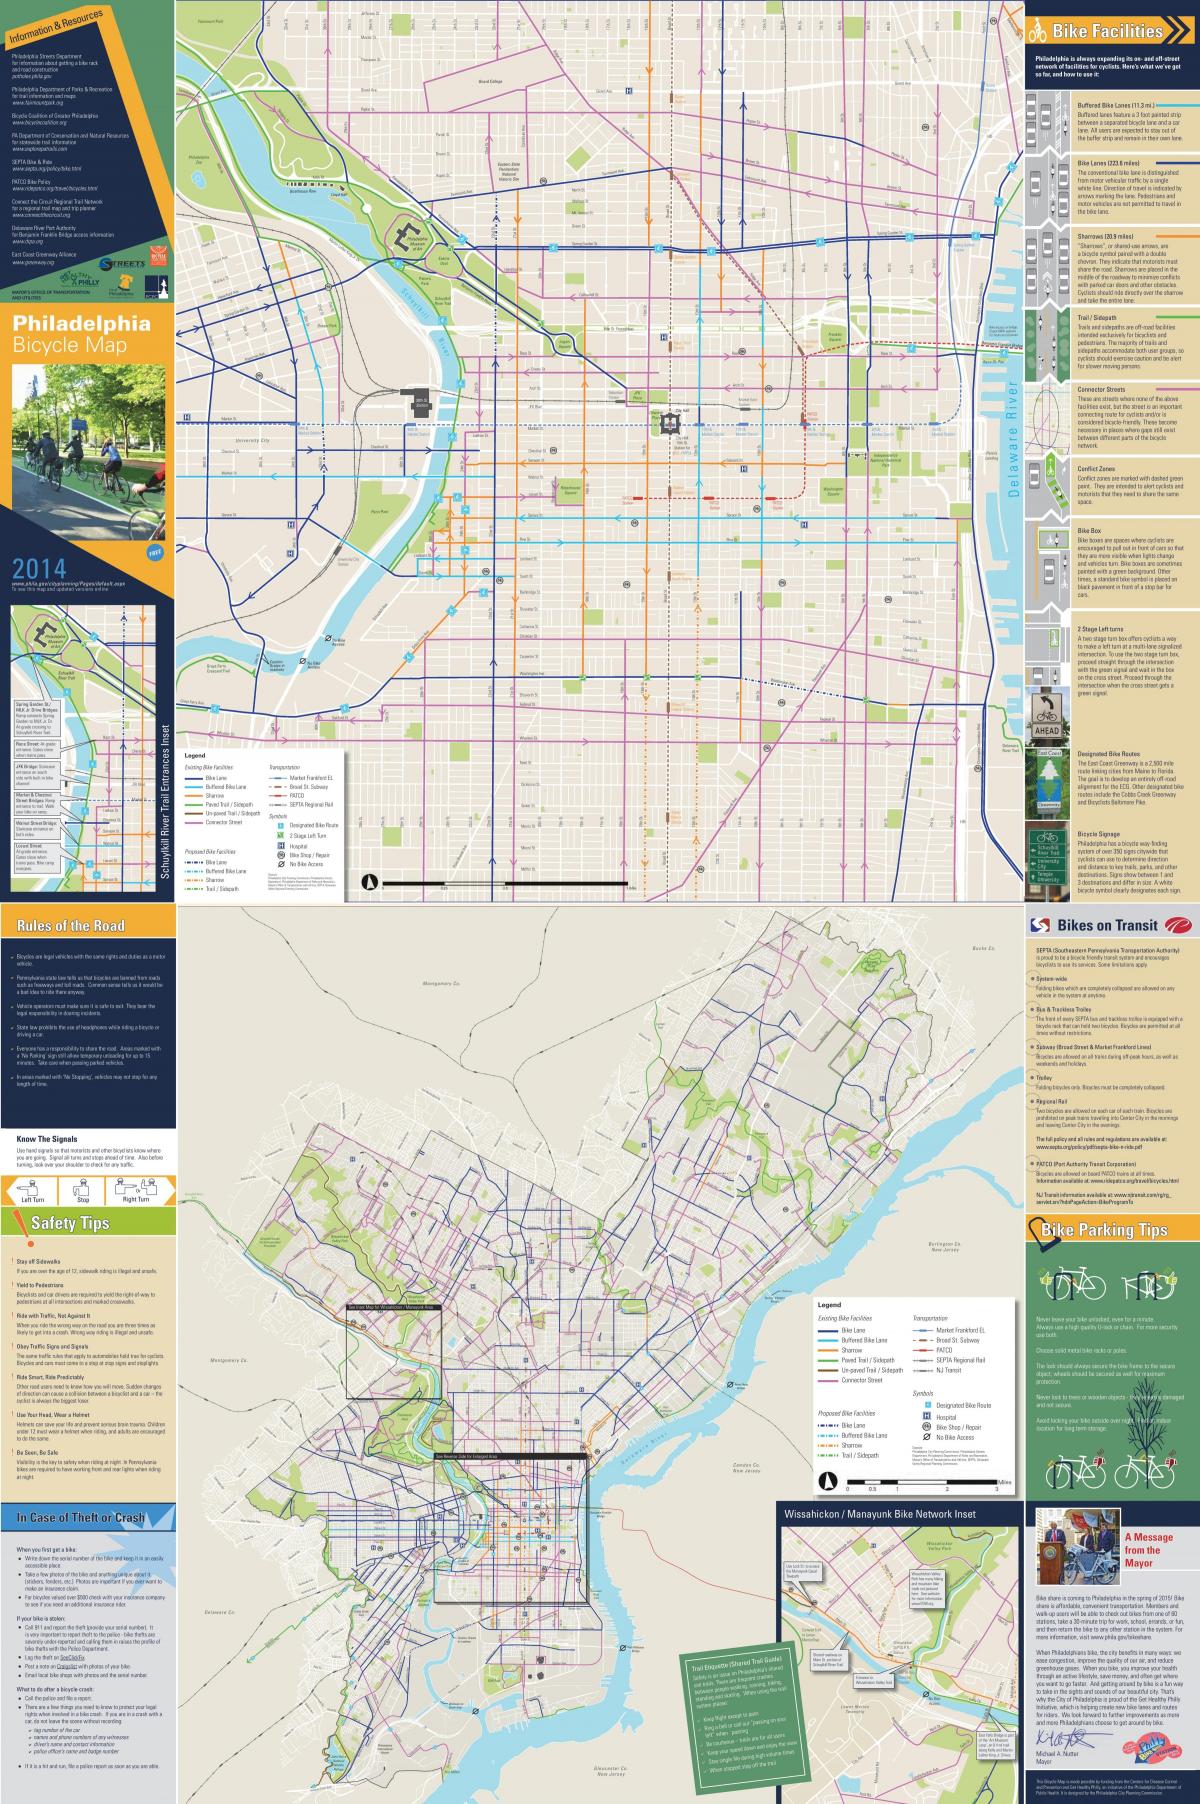 Philadelphia bike lane map